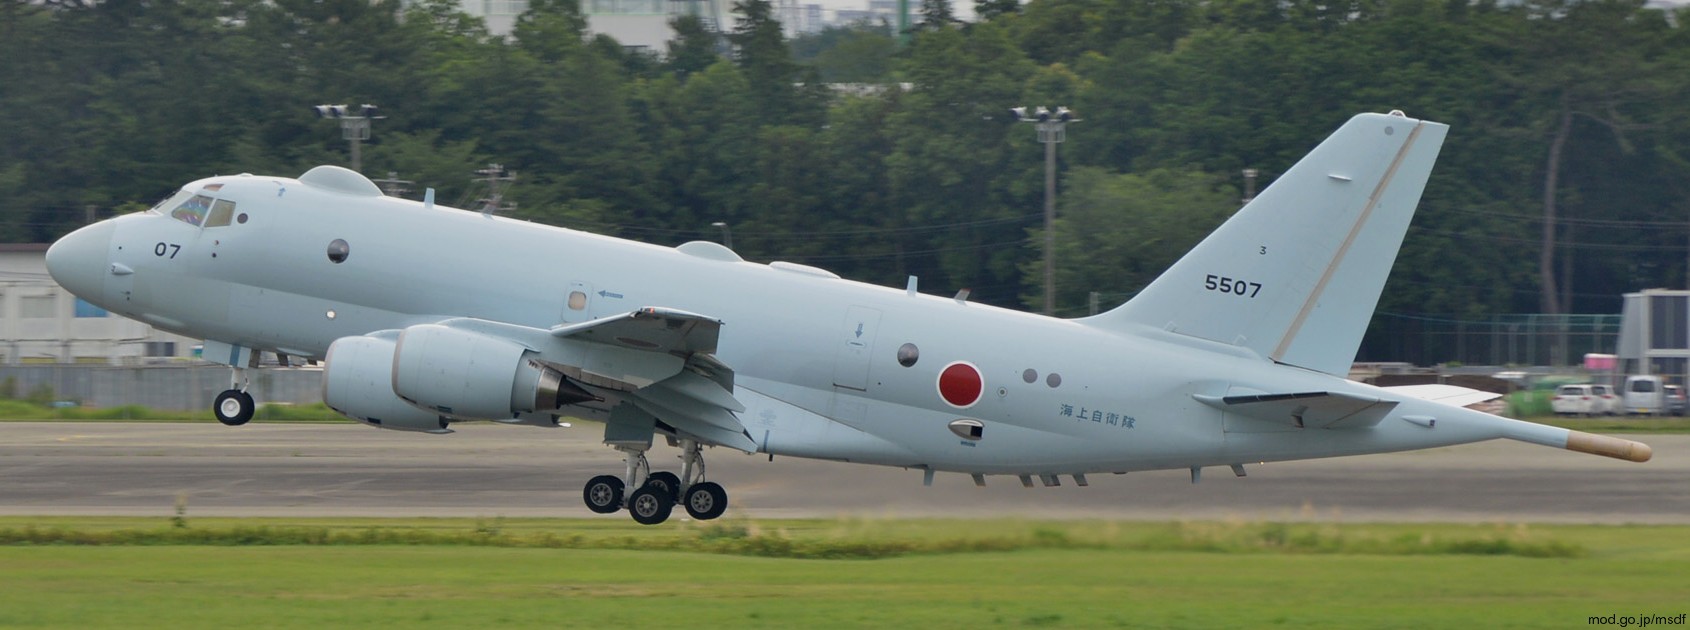 kawasaki p-1 patrol aircraft mpa japan maritime self defense force jmsdf 5507 02